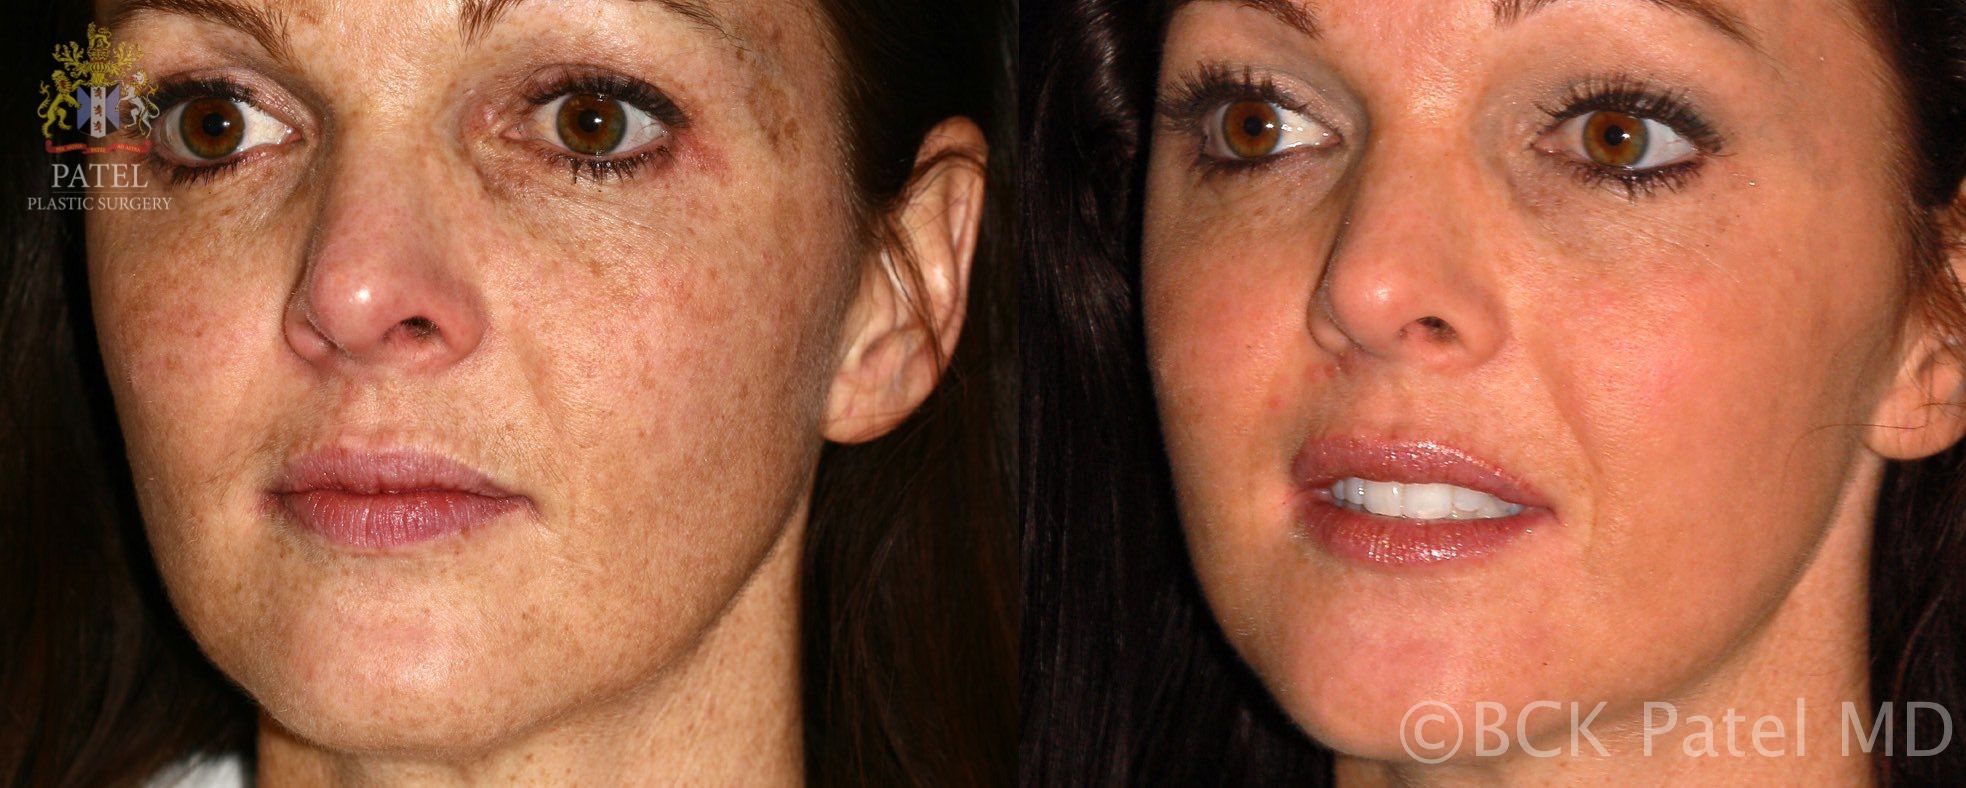 englishsurgeon.com Results of face fotofacial treatments by Dr. BCK Patel MD, FRCS, Salt Lake City, St George